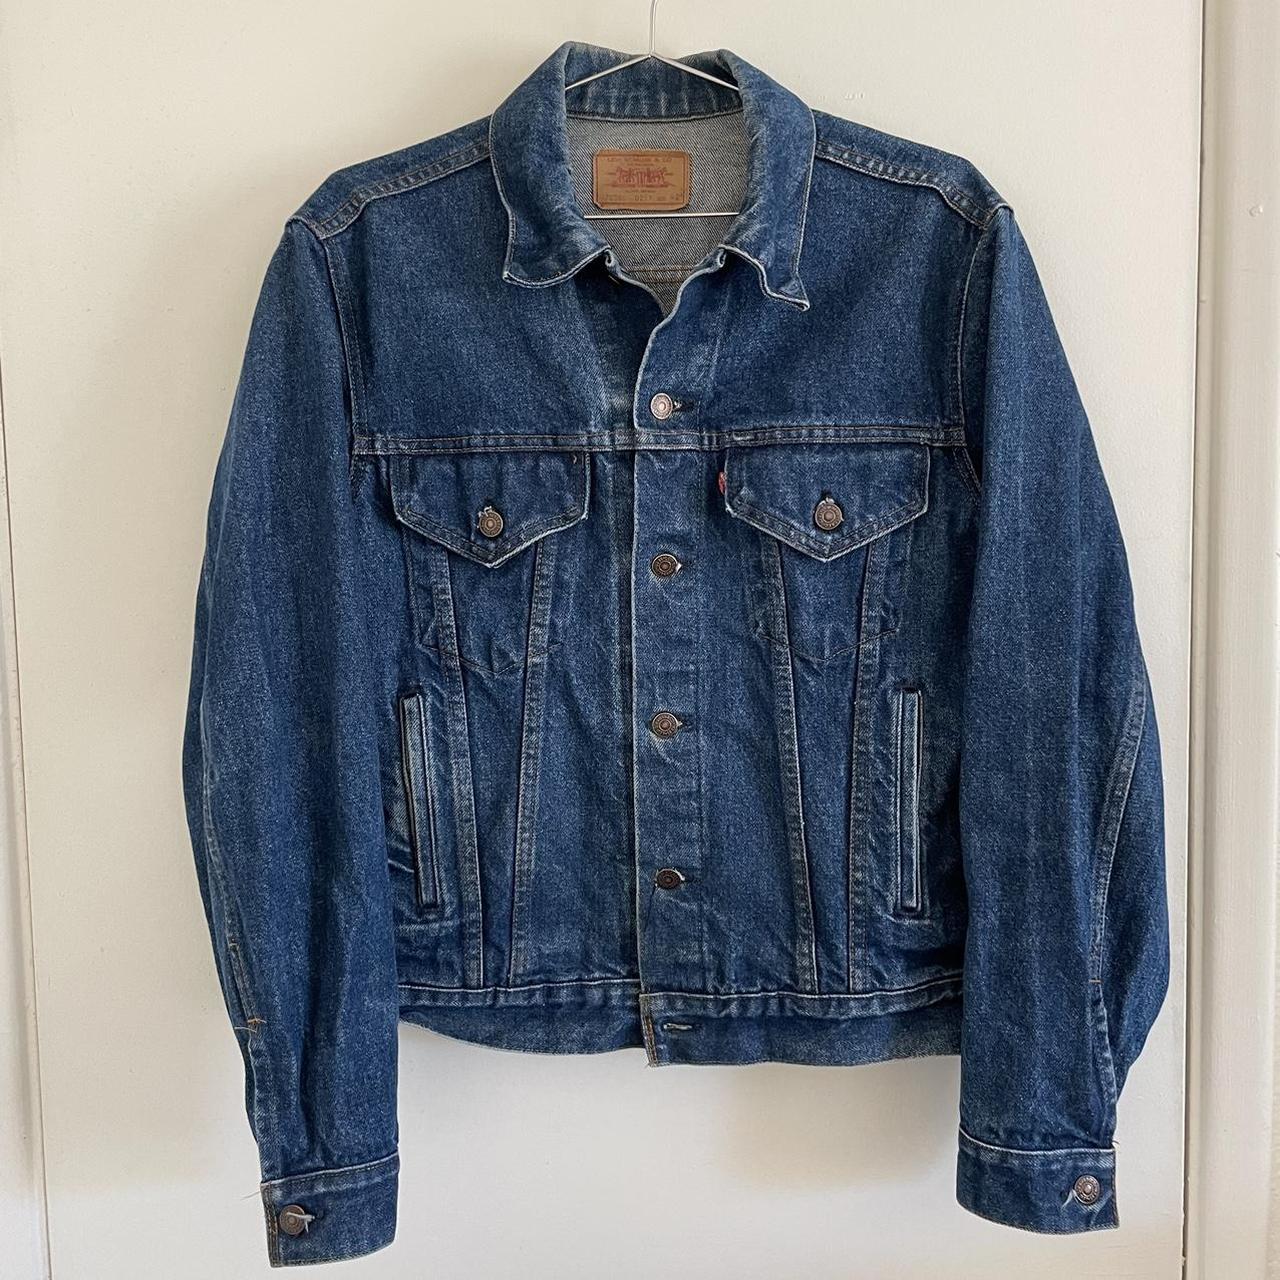 Vintage Levi’s denim jacket - size 42 fits like a... - Depop